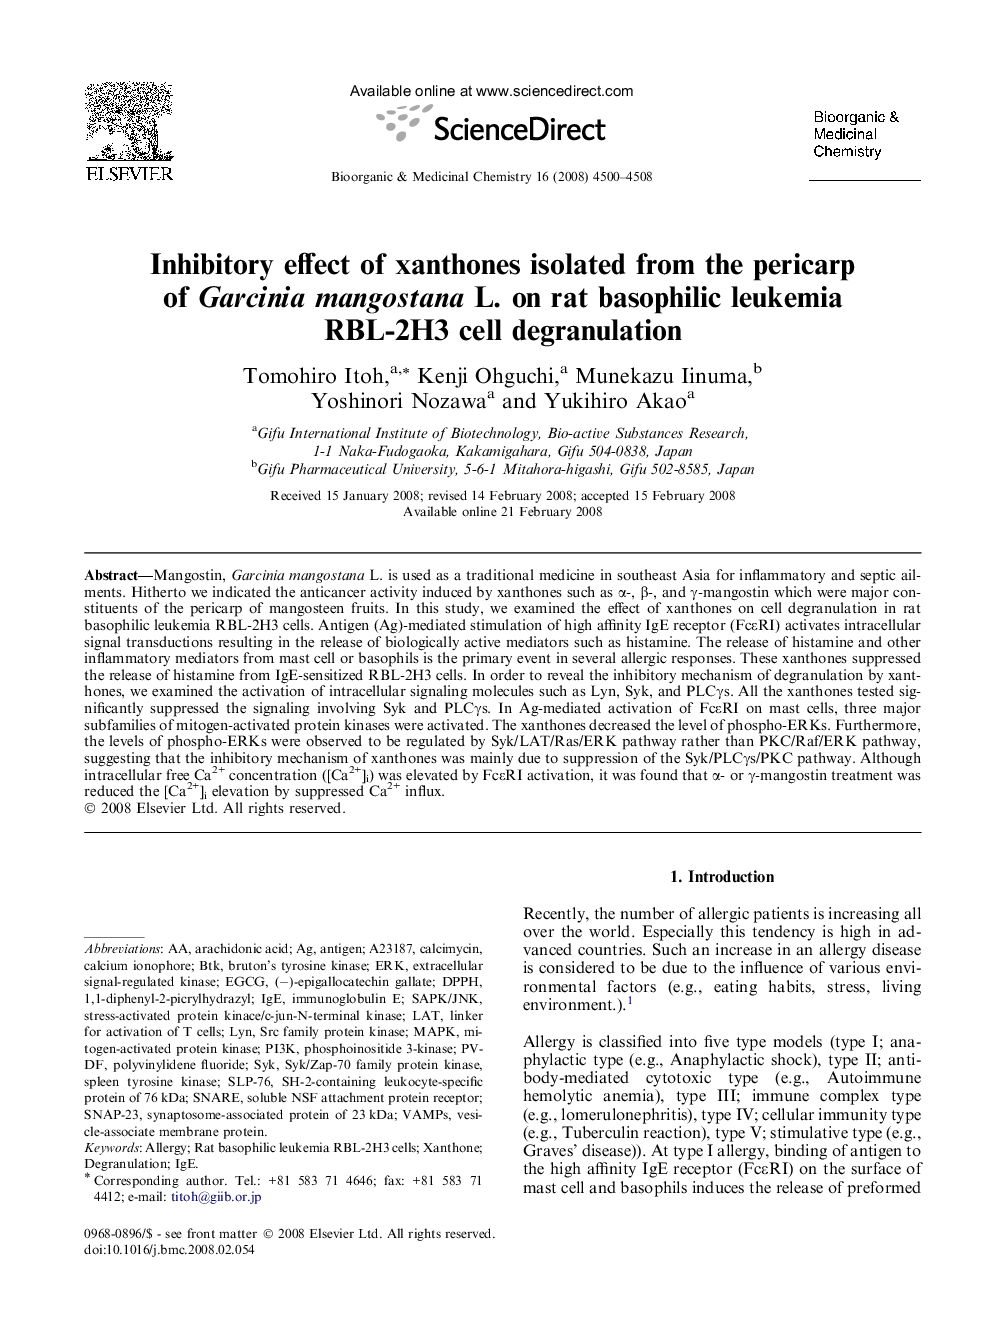 Inhibitory effect of xanthones isolated from the pericarp of Garcinia mangostana L. on rat basophilic leukemia RBL-2H3 cell degranulation